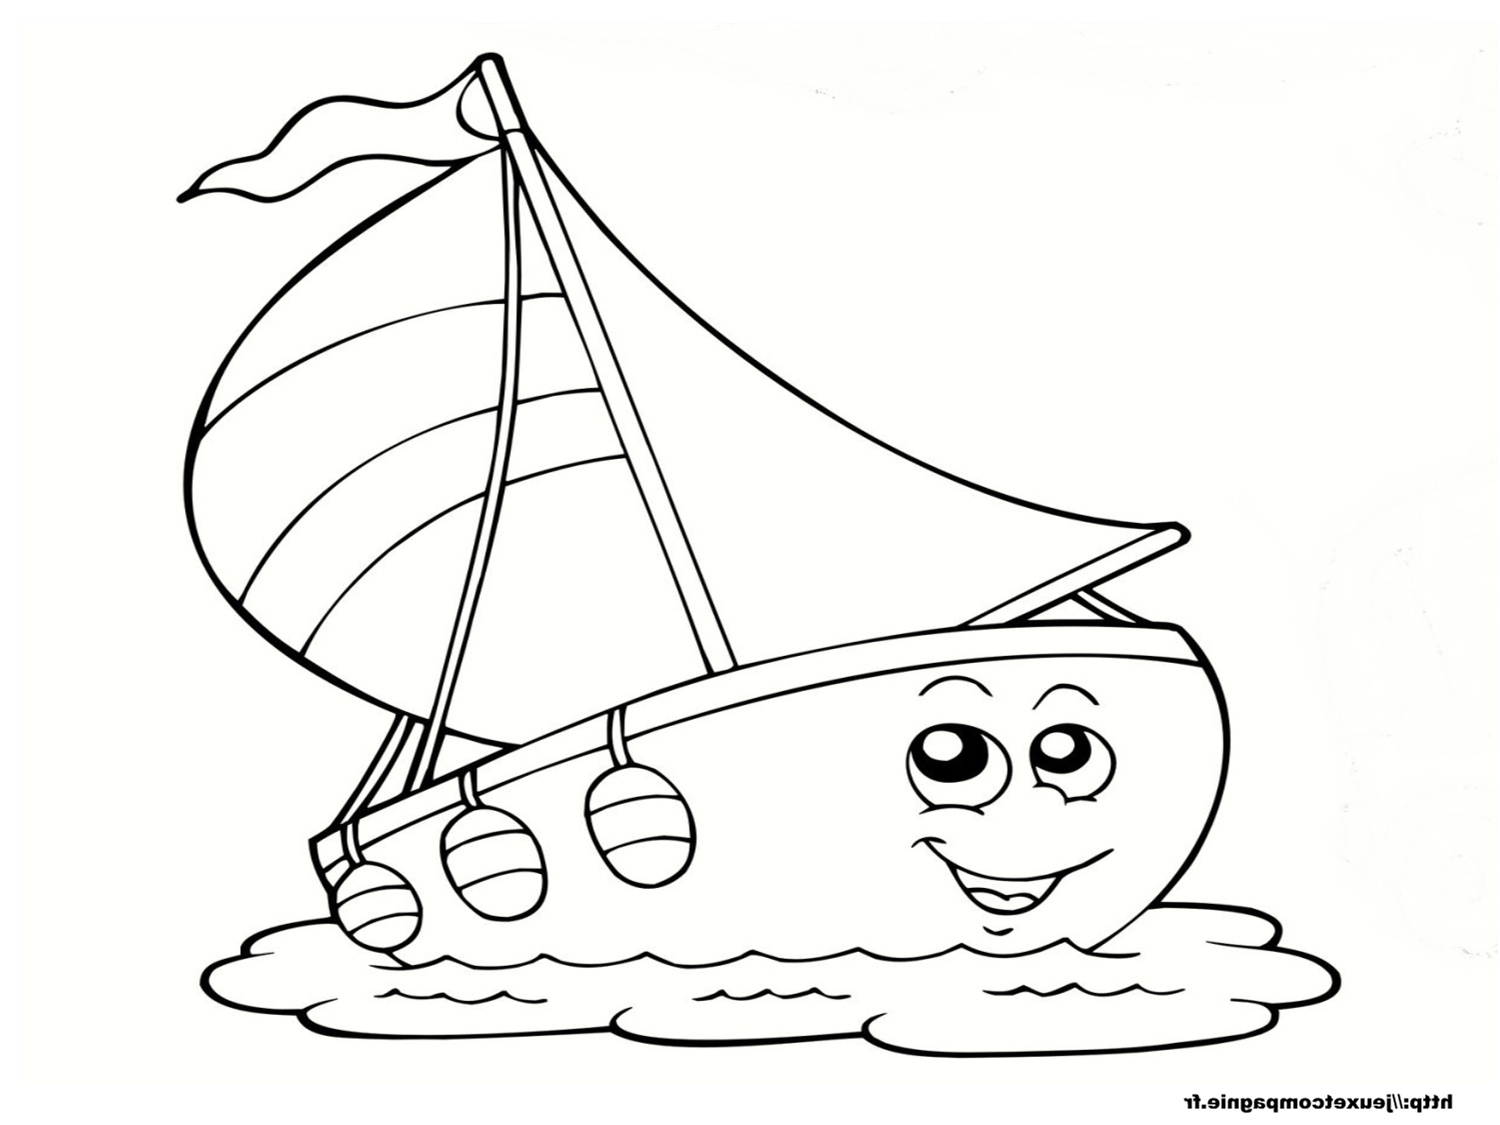 dessin a colorier bateau facile